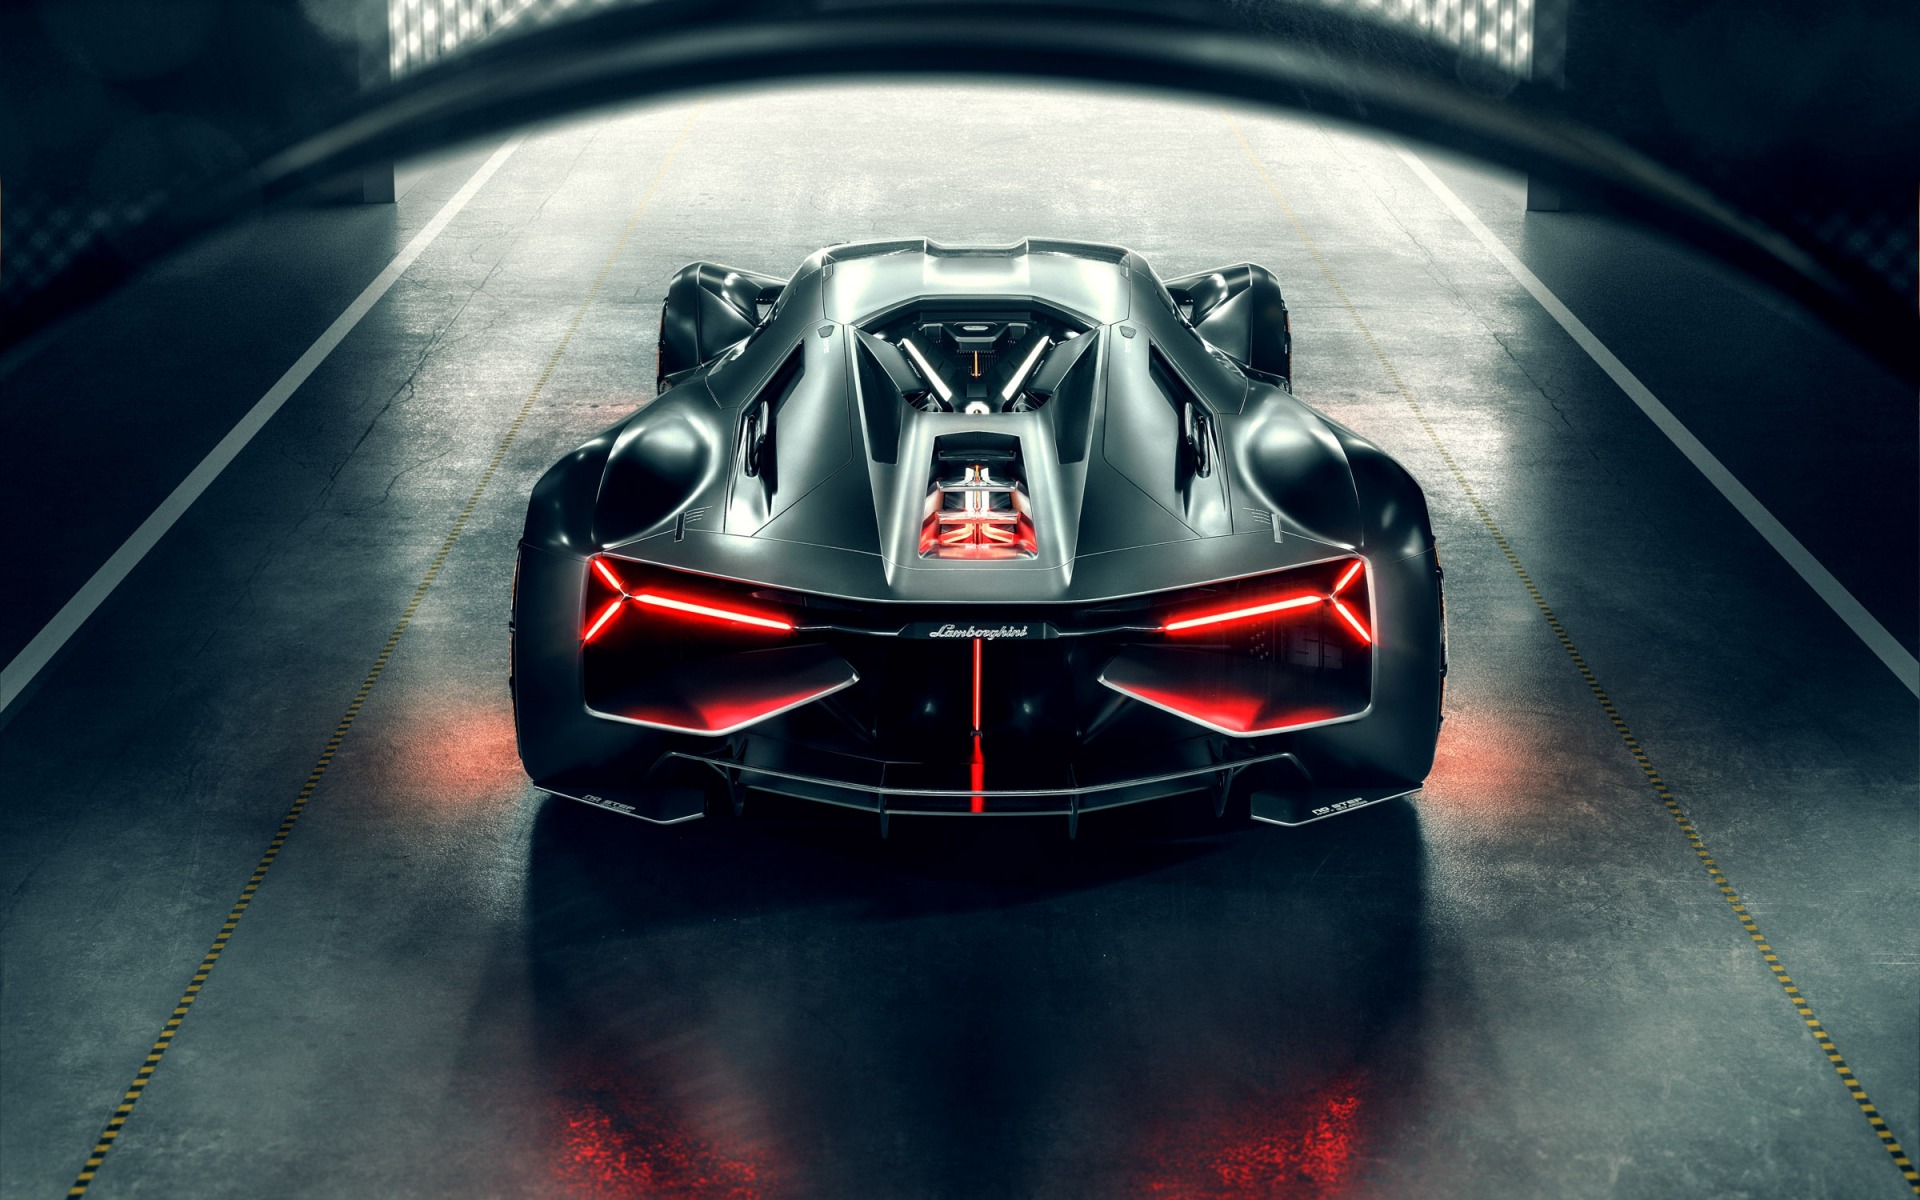 Lamborghini Concept Cars Hd Wallpapers Download